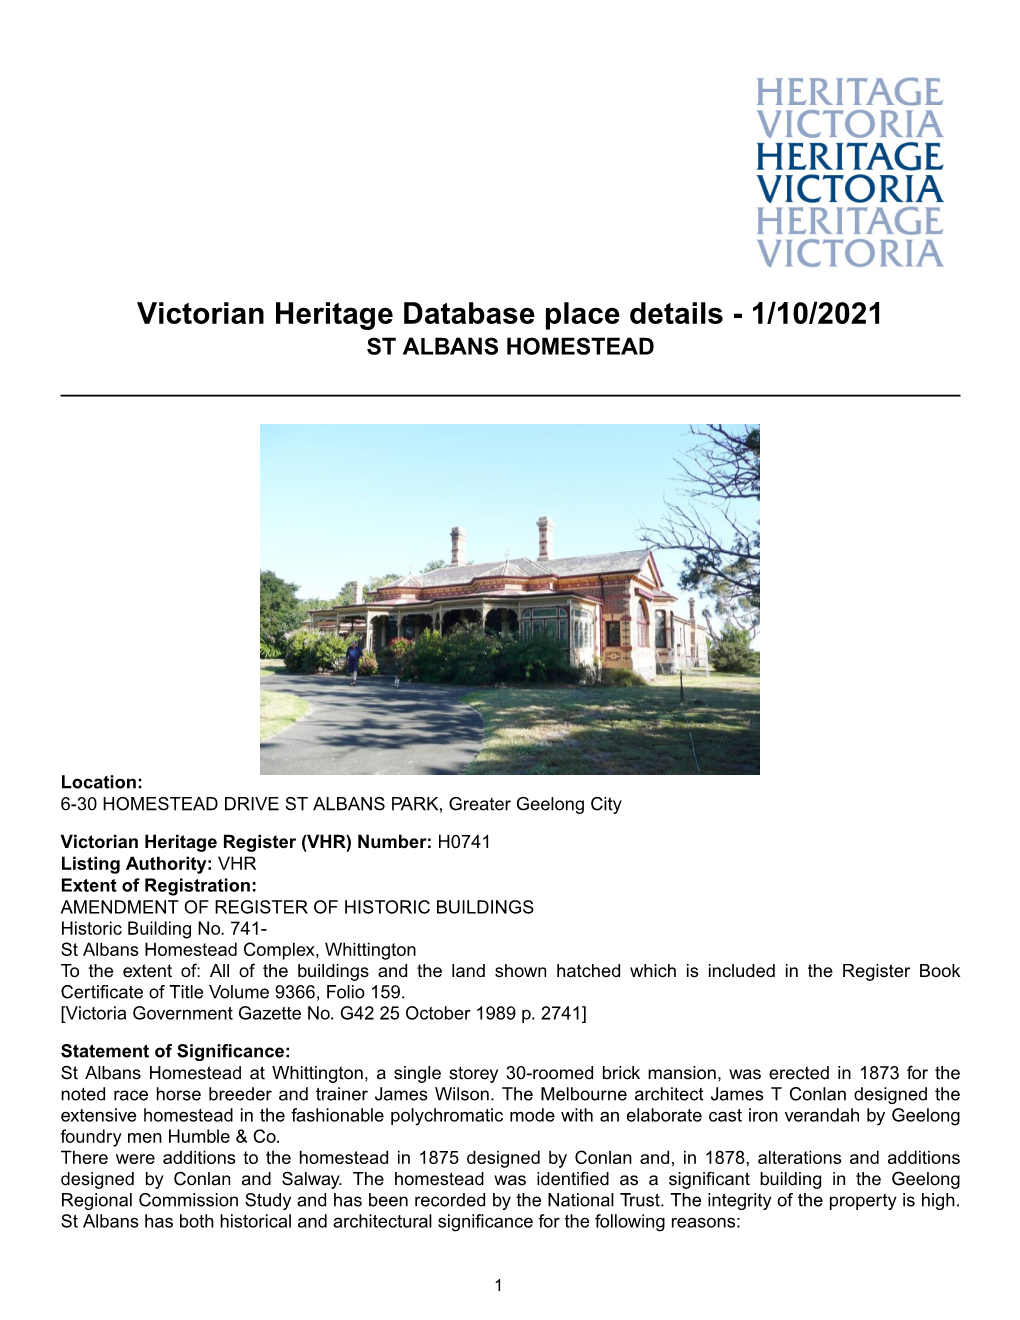 Victorian Heritage Database Place Details - 1/10/2021 ST ALBANS HOMESTEAD